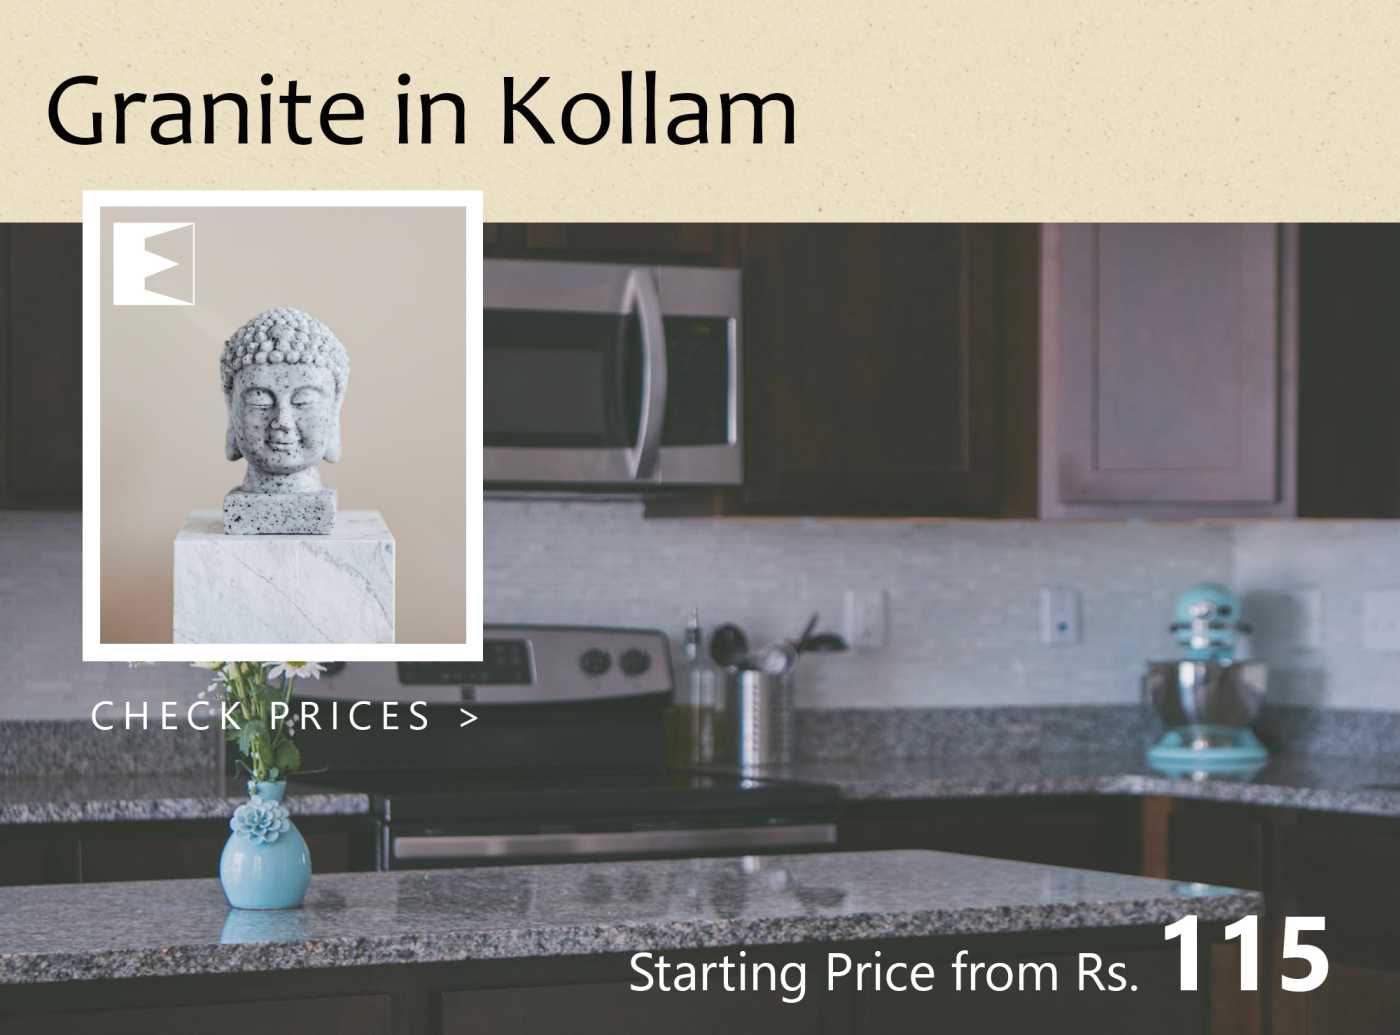 Granite Price in Kollam | Starting from 115 INR